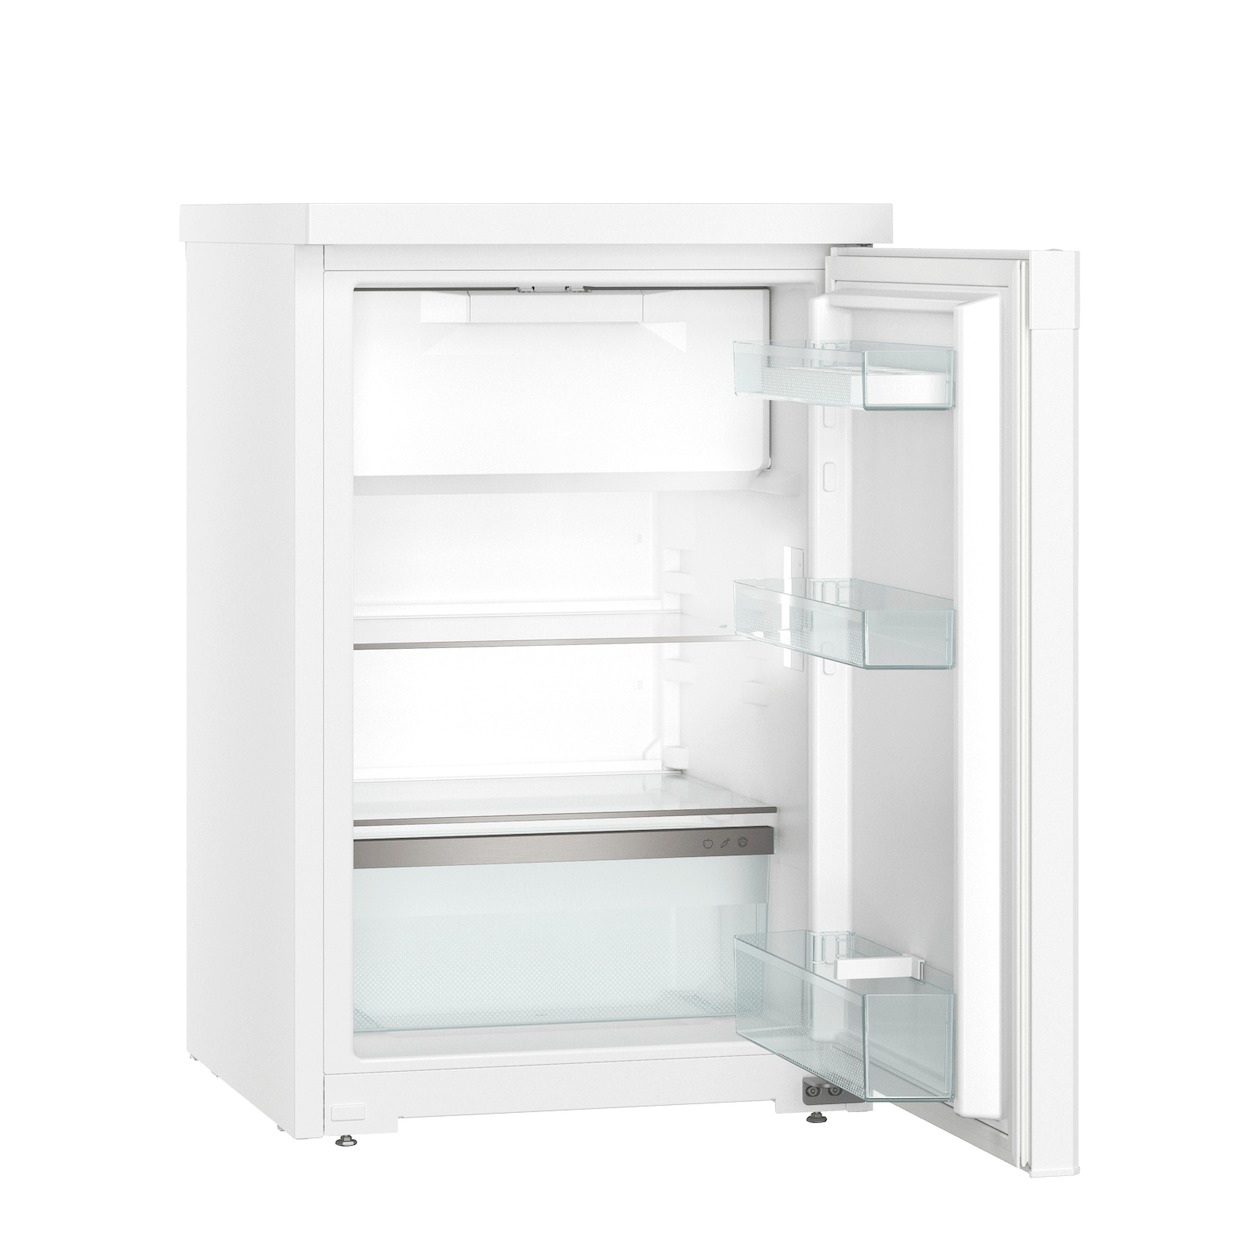 Liebherr Rc 1401-20 Tafelmodel koelkast met vriesvak